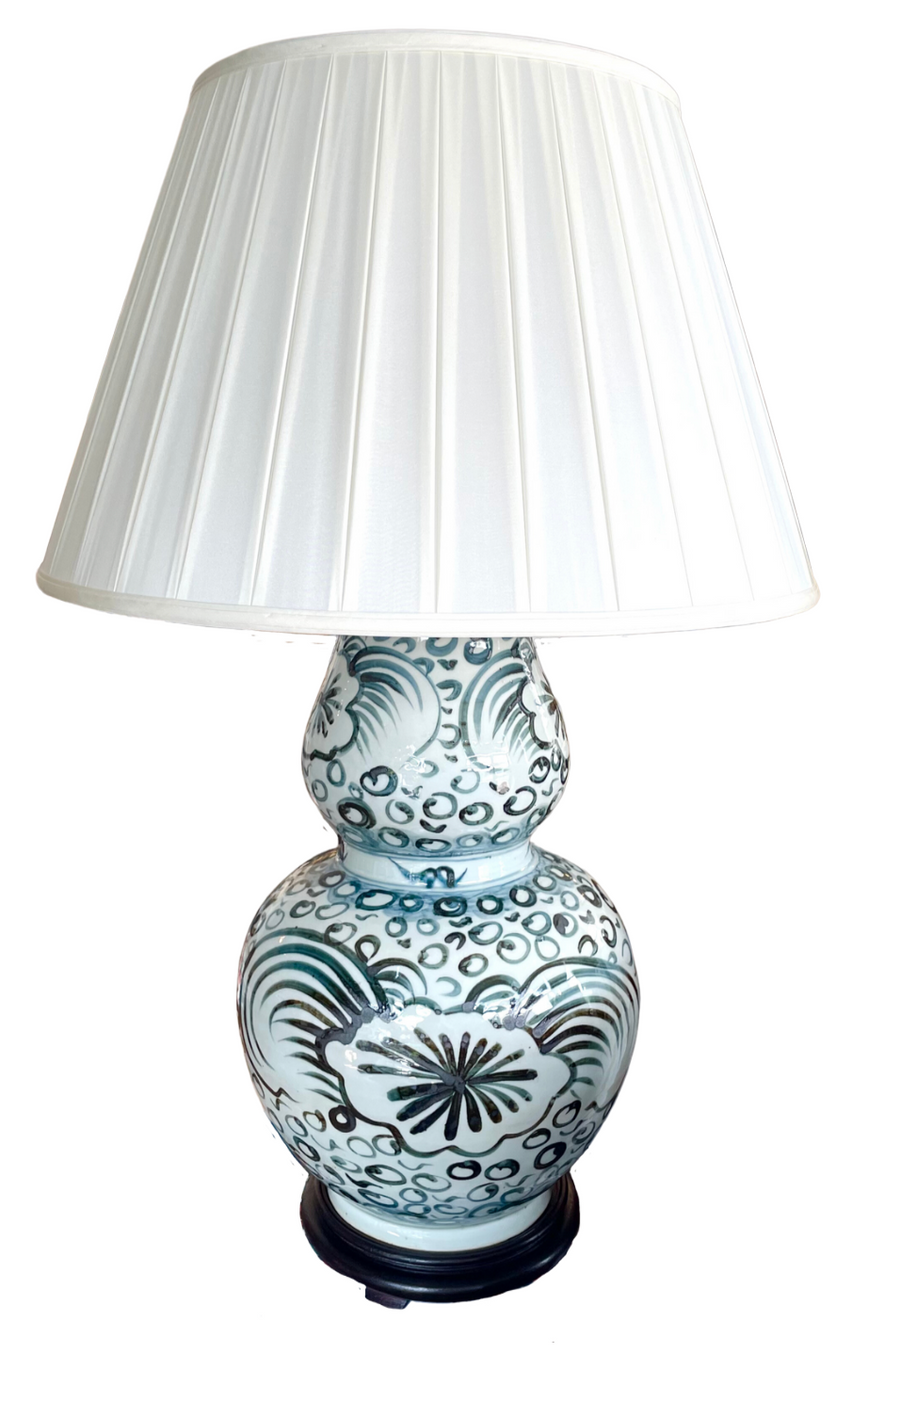 Custom Glazed Indigo Seaflower Lamps (pair)